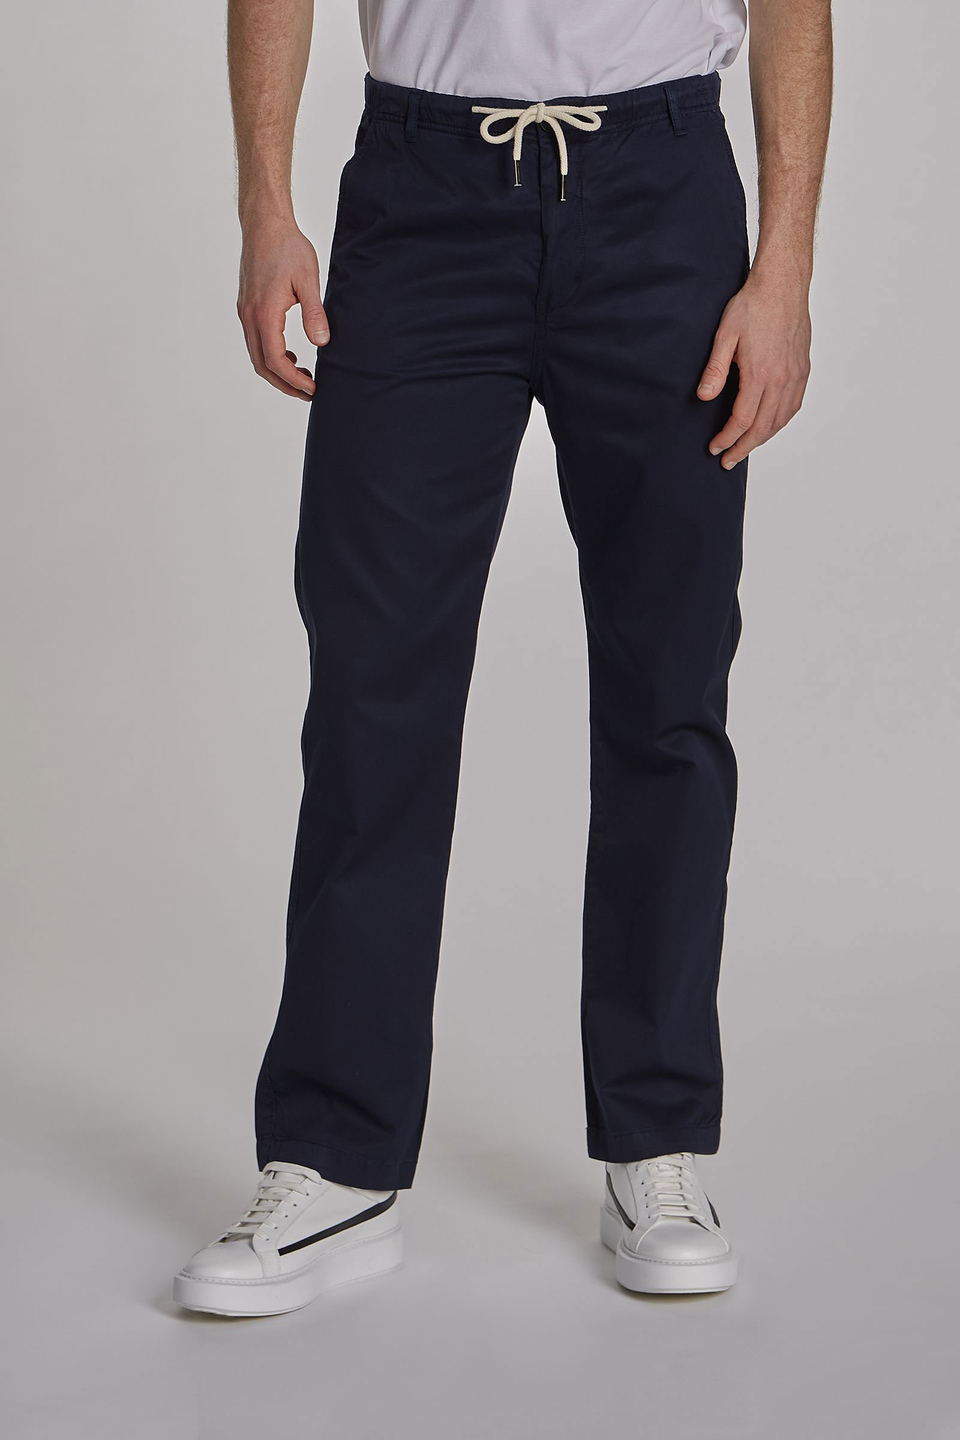 Pantalone da uomo in cotone 100% regular fit - La Martina - Official Online Shop